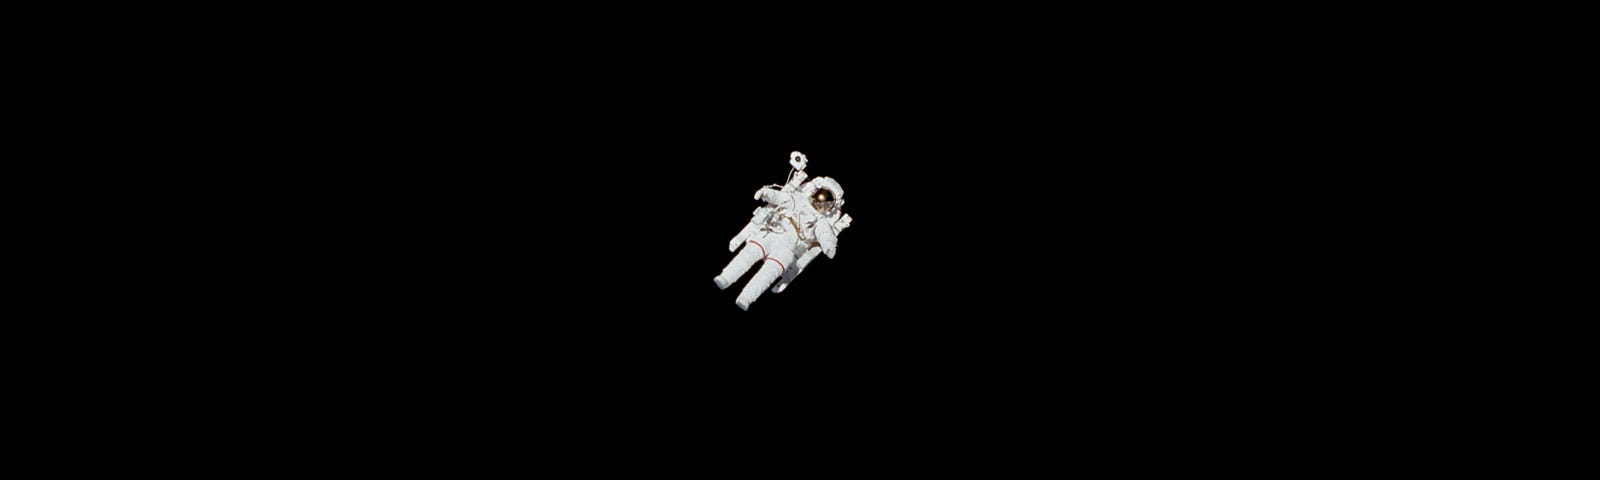 An astronaut on a spacewalk above the Earth’s surface